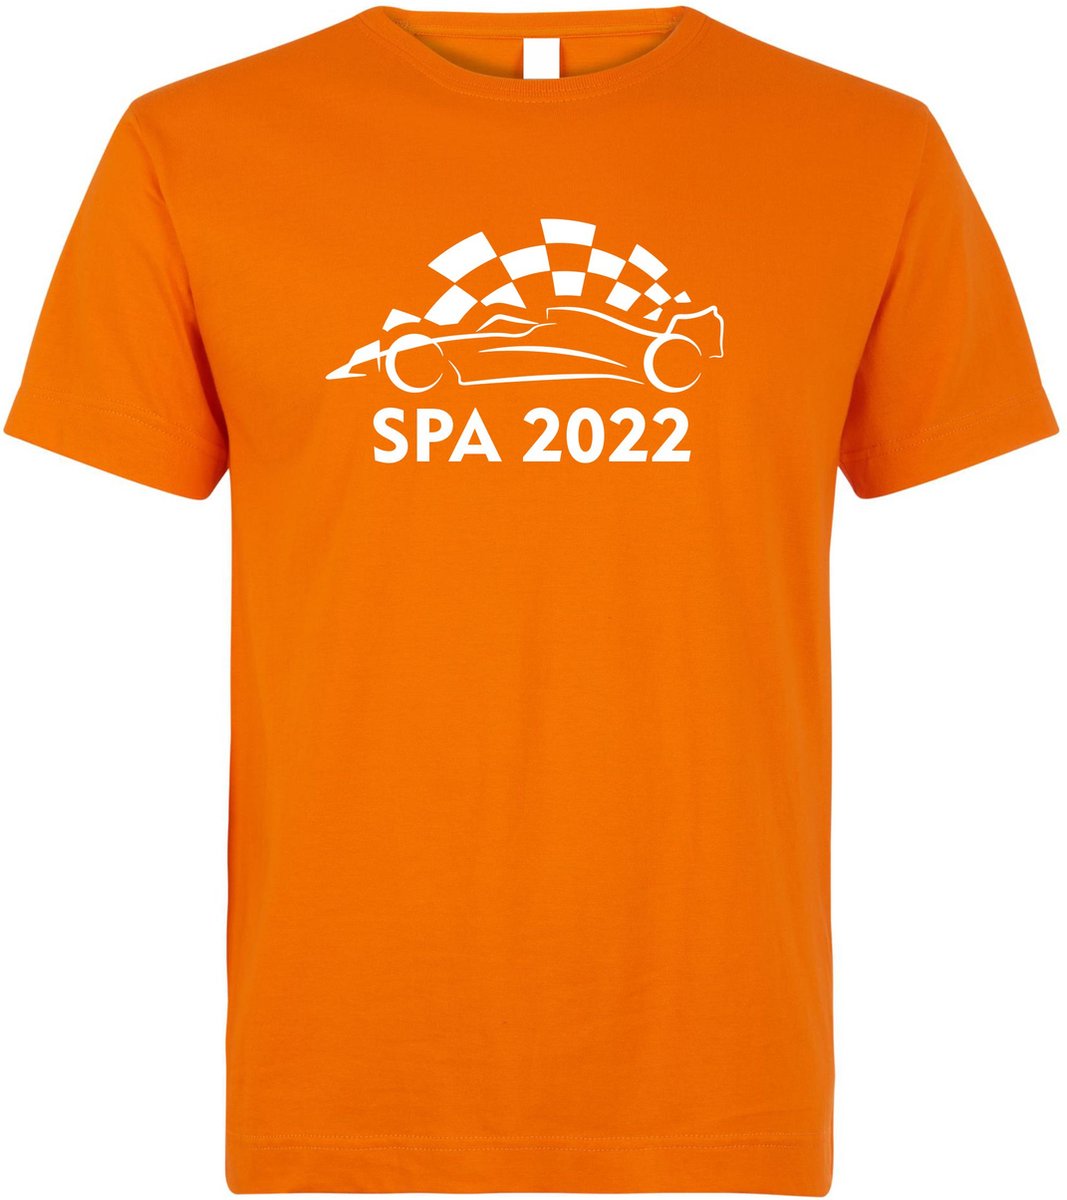 T-shirt kinderen Spa 2022 met raceauto | Max Verstappen / Red Bull Racing / Formule 1 fan | Grand Prix Circuit Spa-Francorchamps | kleding shirt | Oranje | maat 164